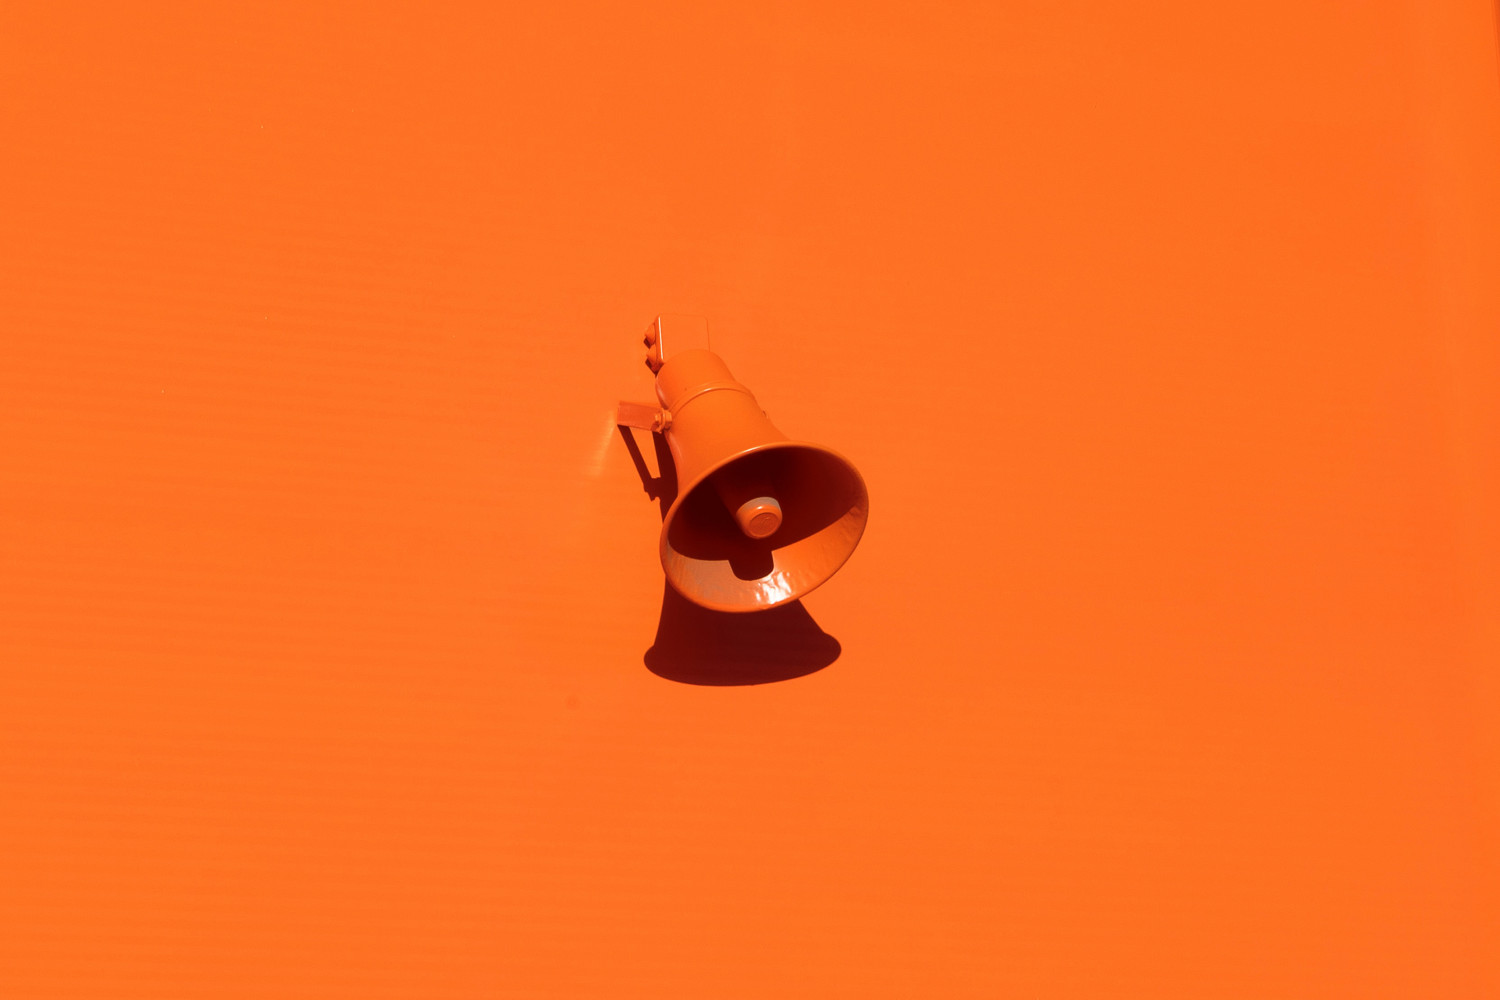 Image of an orange megaphone on an orange painted wall